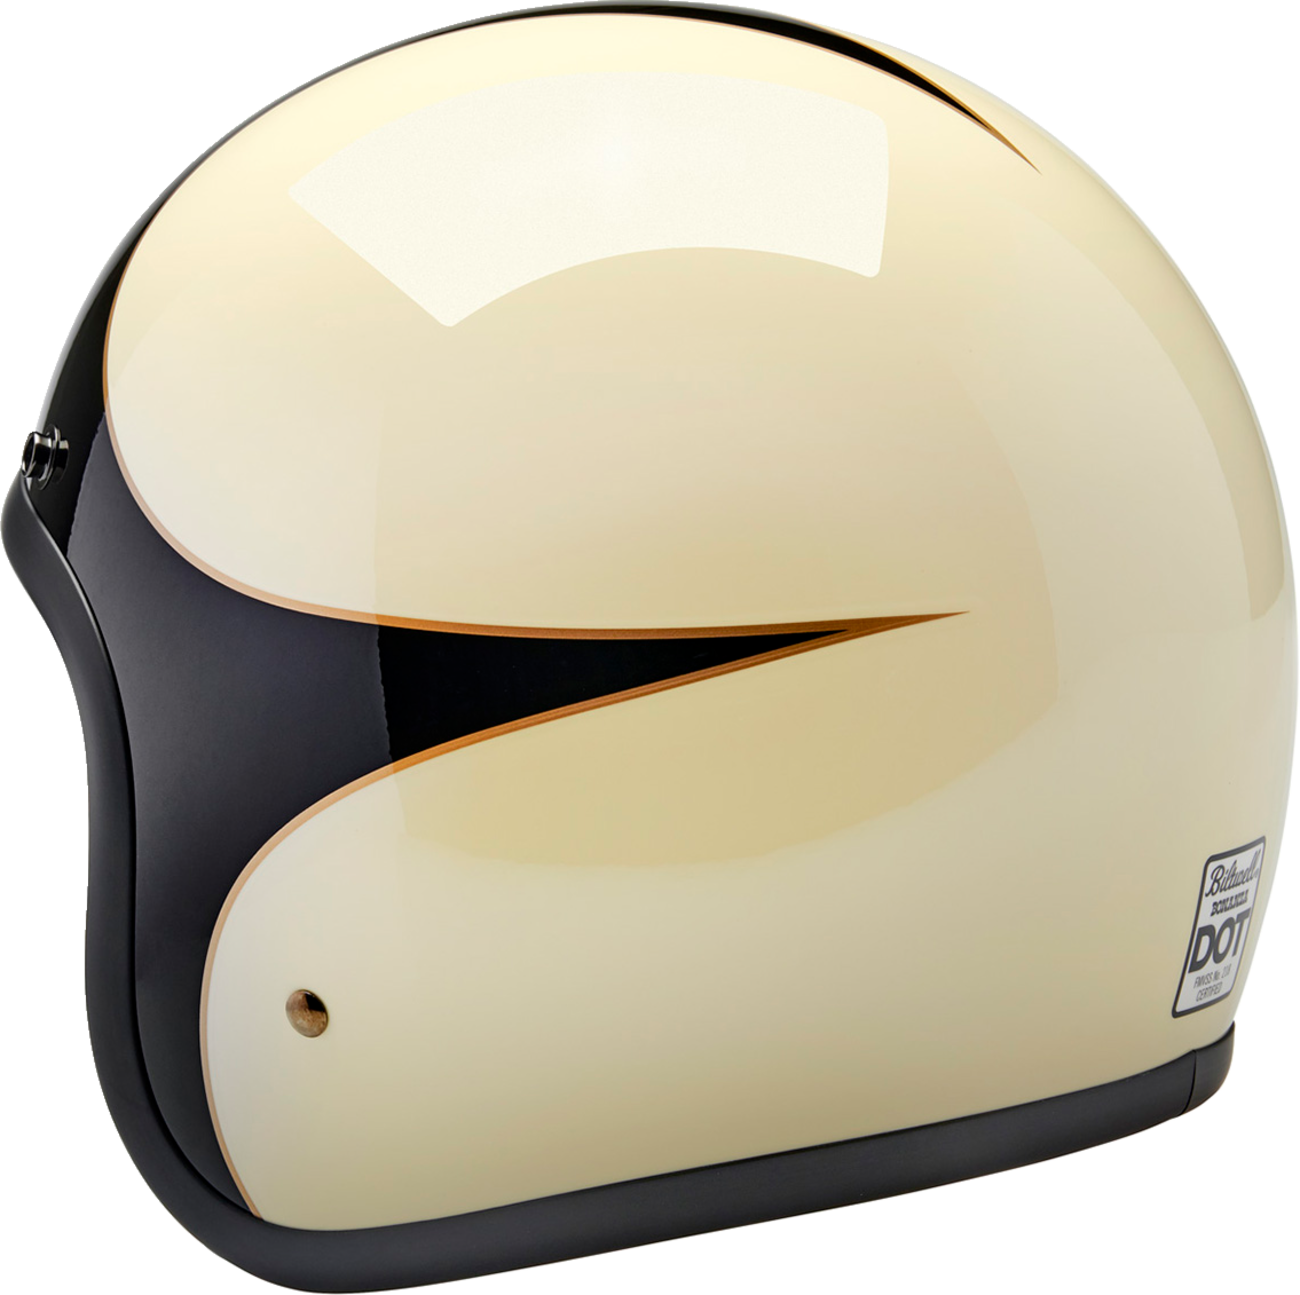 BILTWELL Bonanza Helmet - Gloss Vintage White/Black Scallop - Medium 1001-559-203